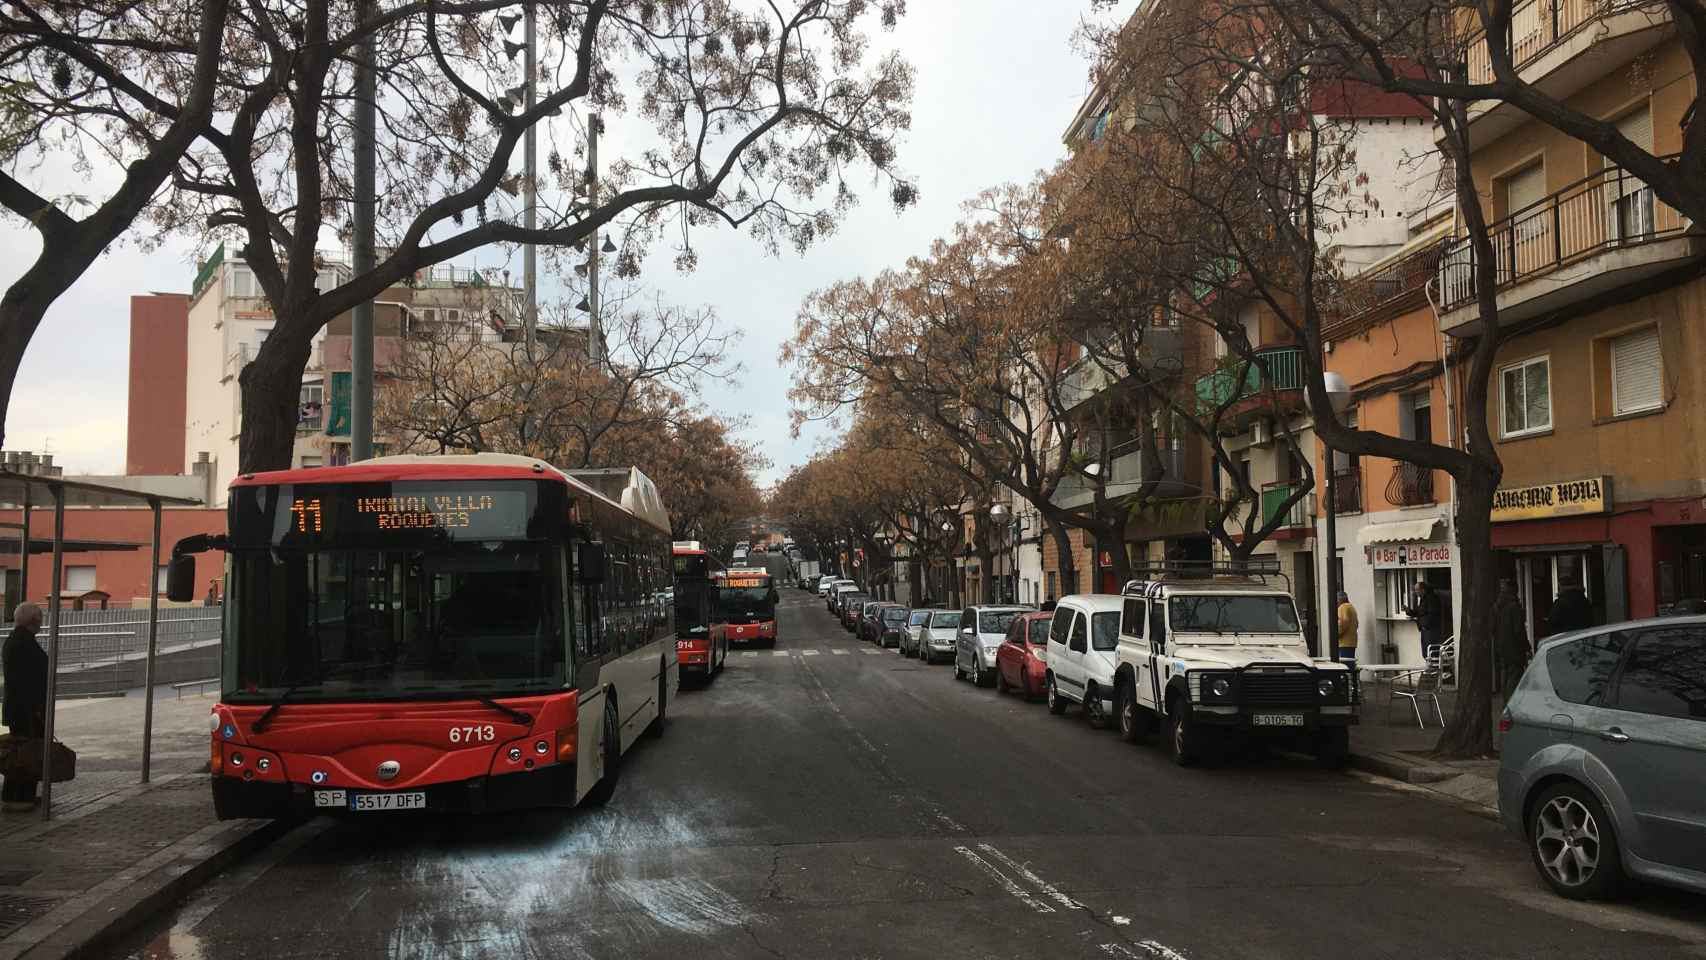 Parada de autobuses al final de la Mina de la Ciutat, punto de disputa del nuevo plan de movilidad / AO